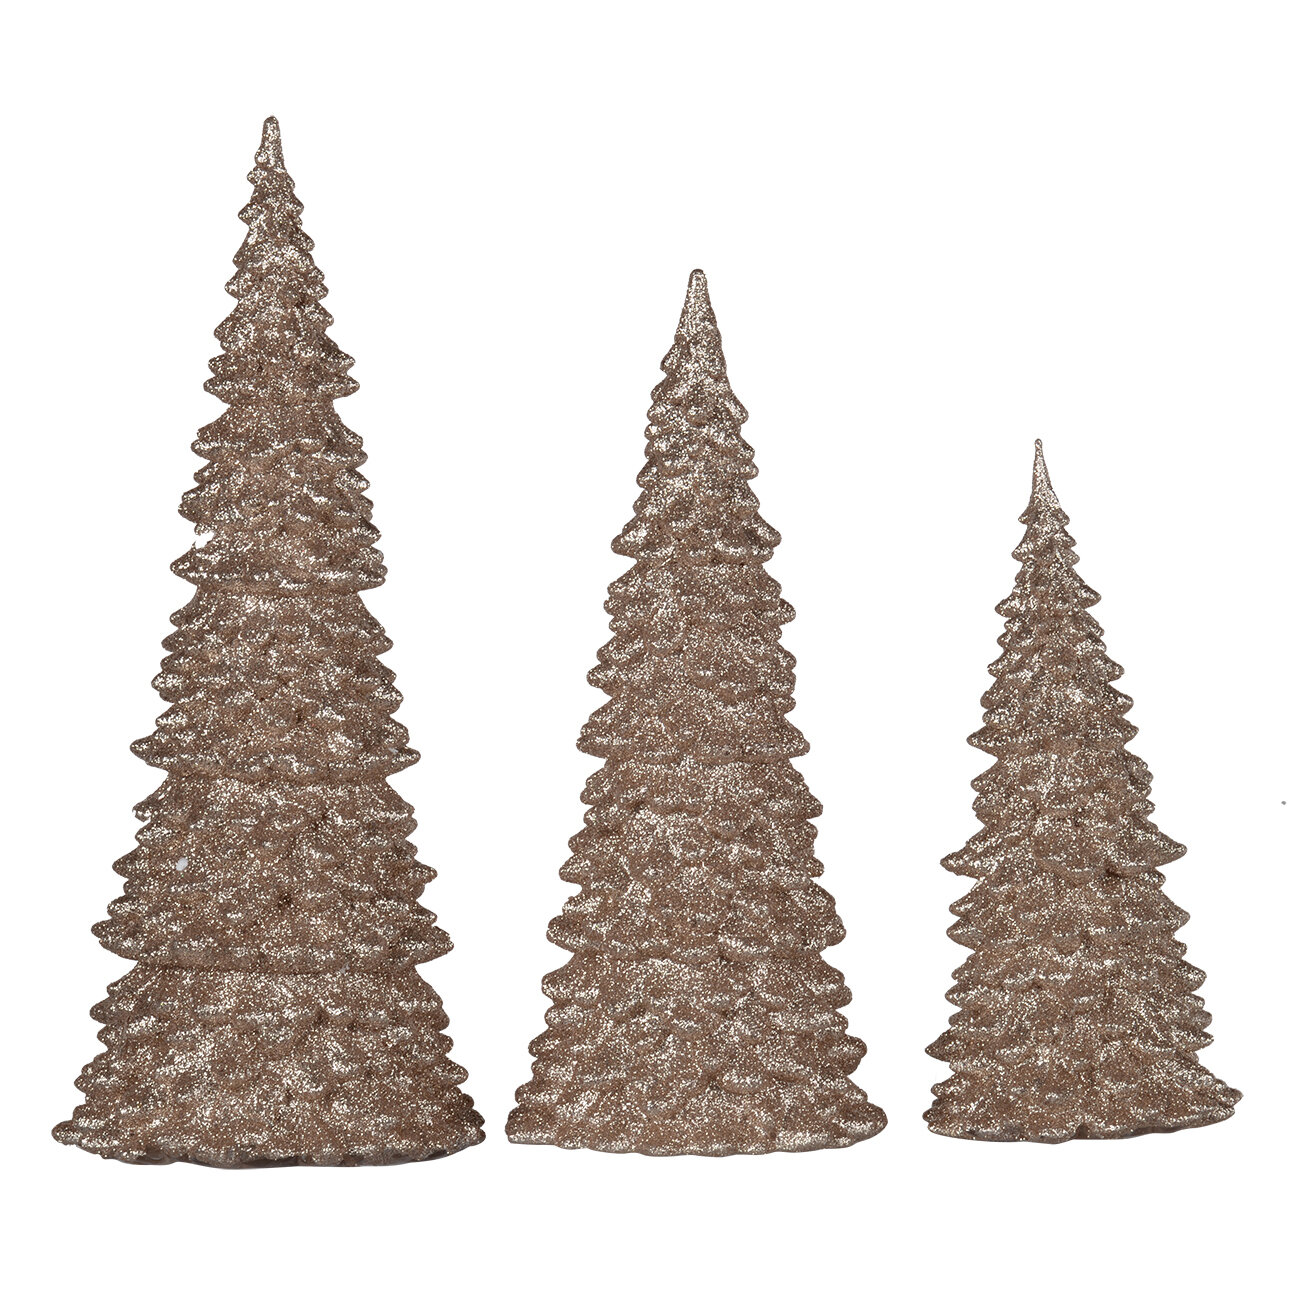 Three Posts™ Christmas Tree with Colorful LED Lights & Reviews | Wayfair